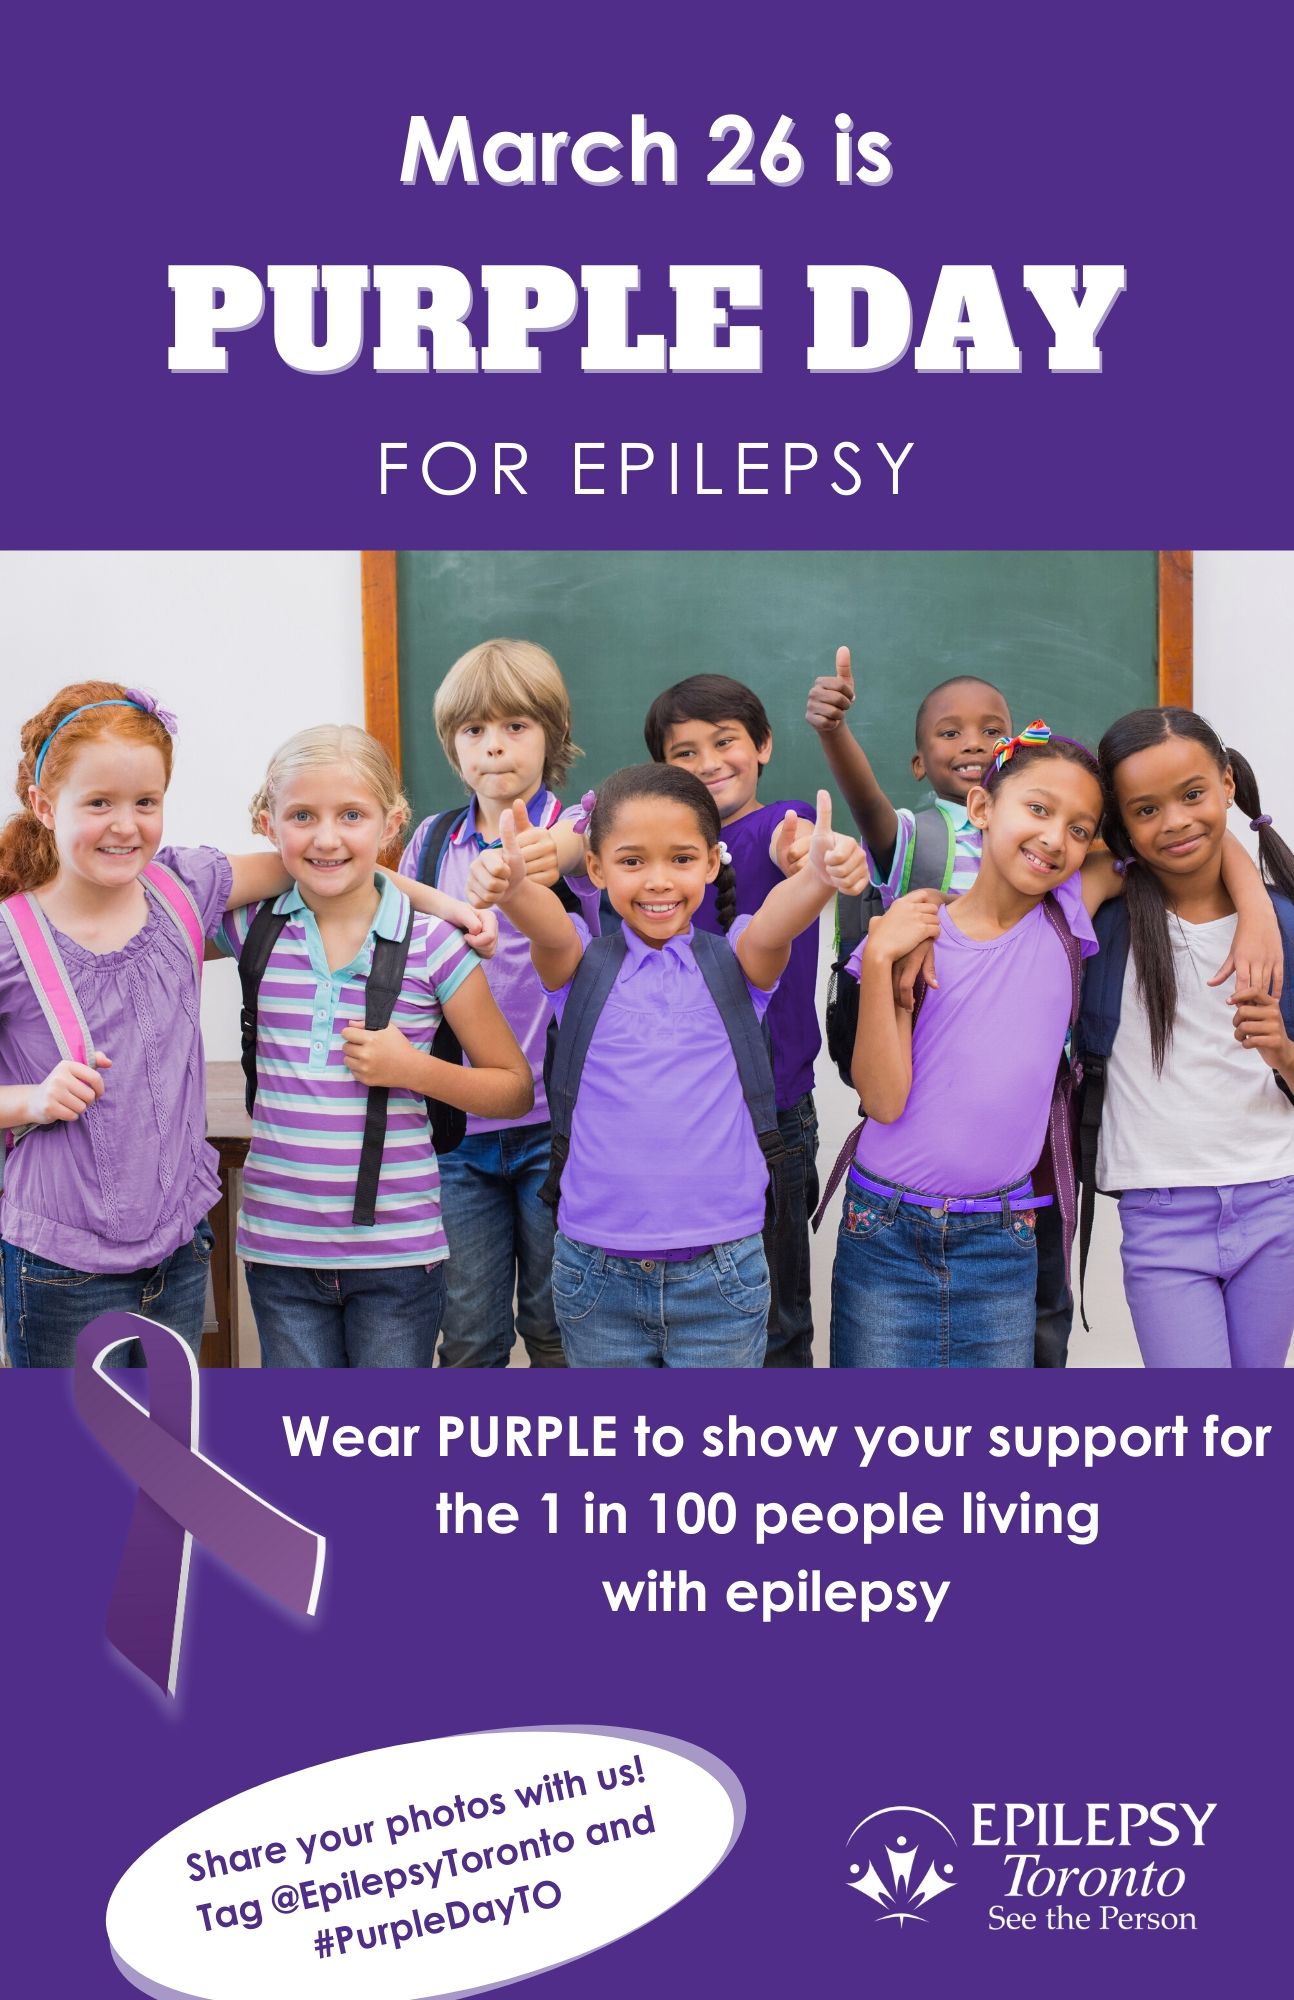 purple-day-epilepsy-toronto